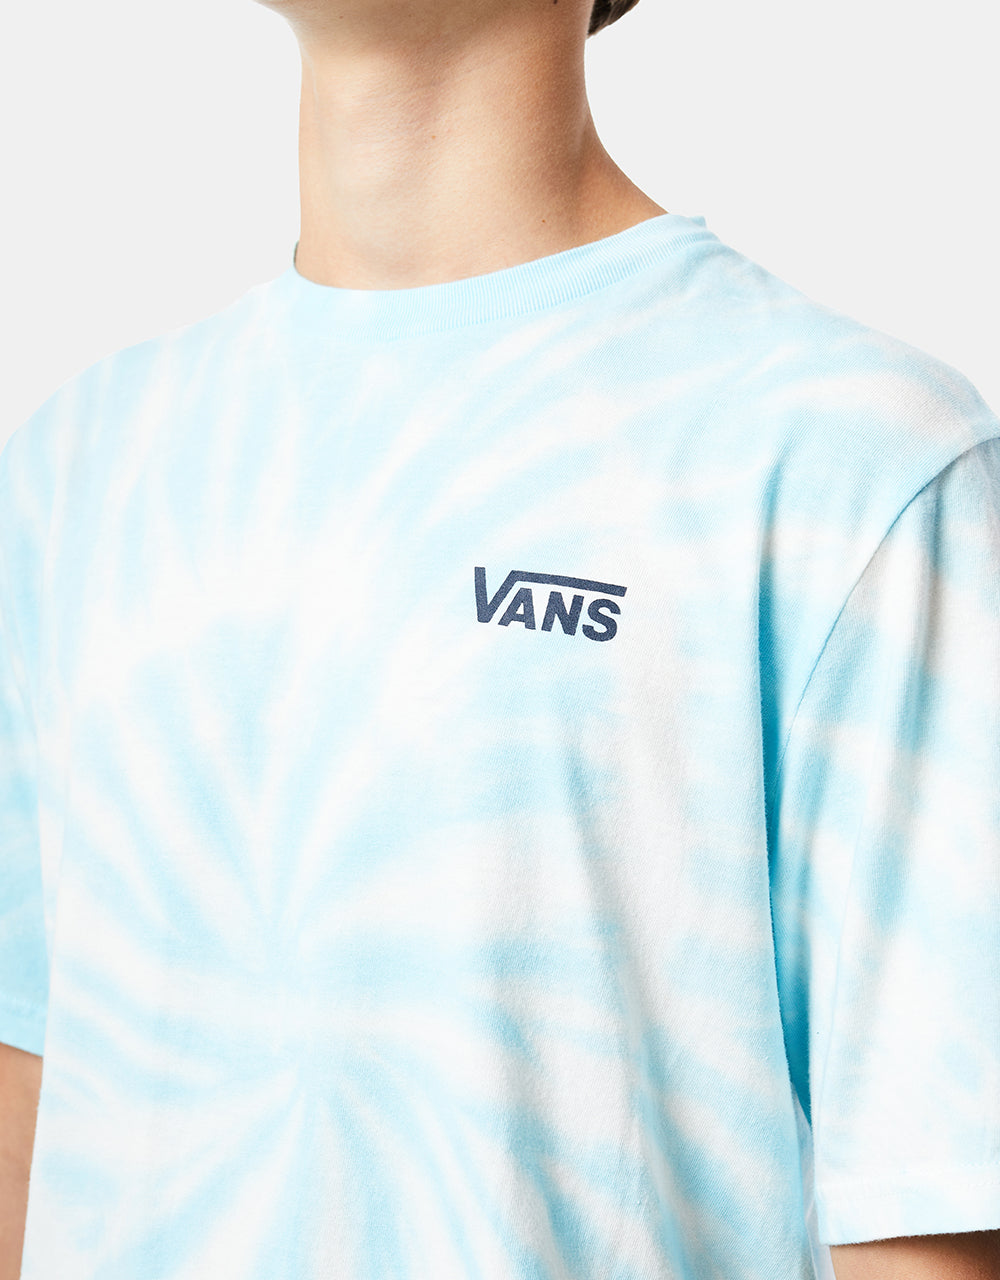 Vans Burst Tie Dye Kids T-Shirt - Aquatic/Tie Dye